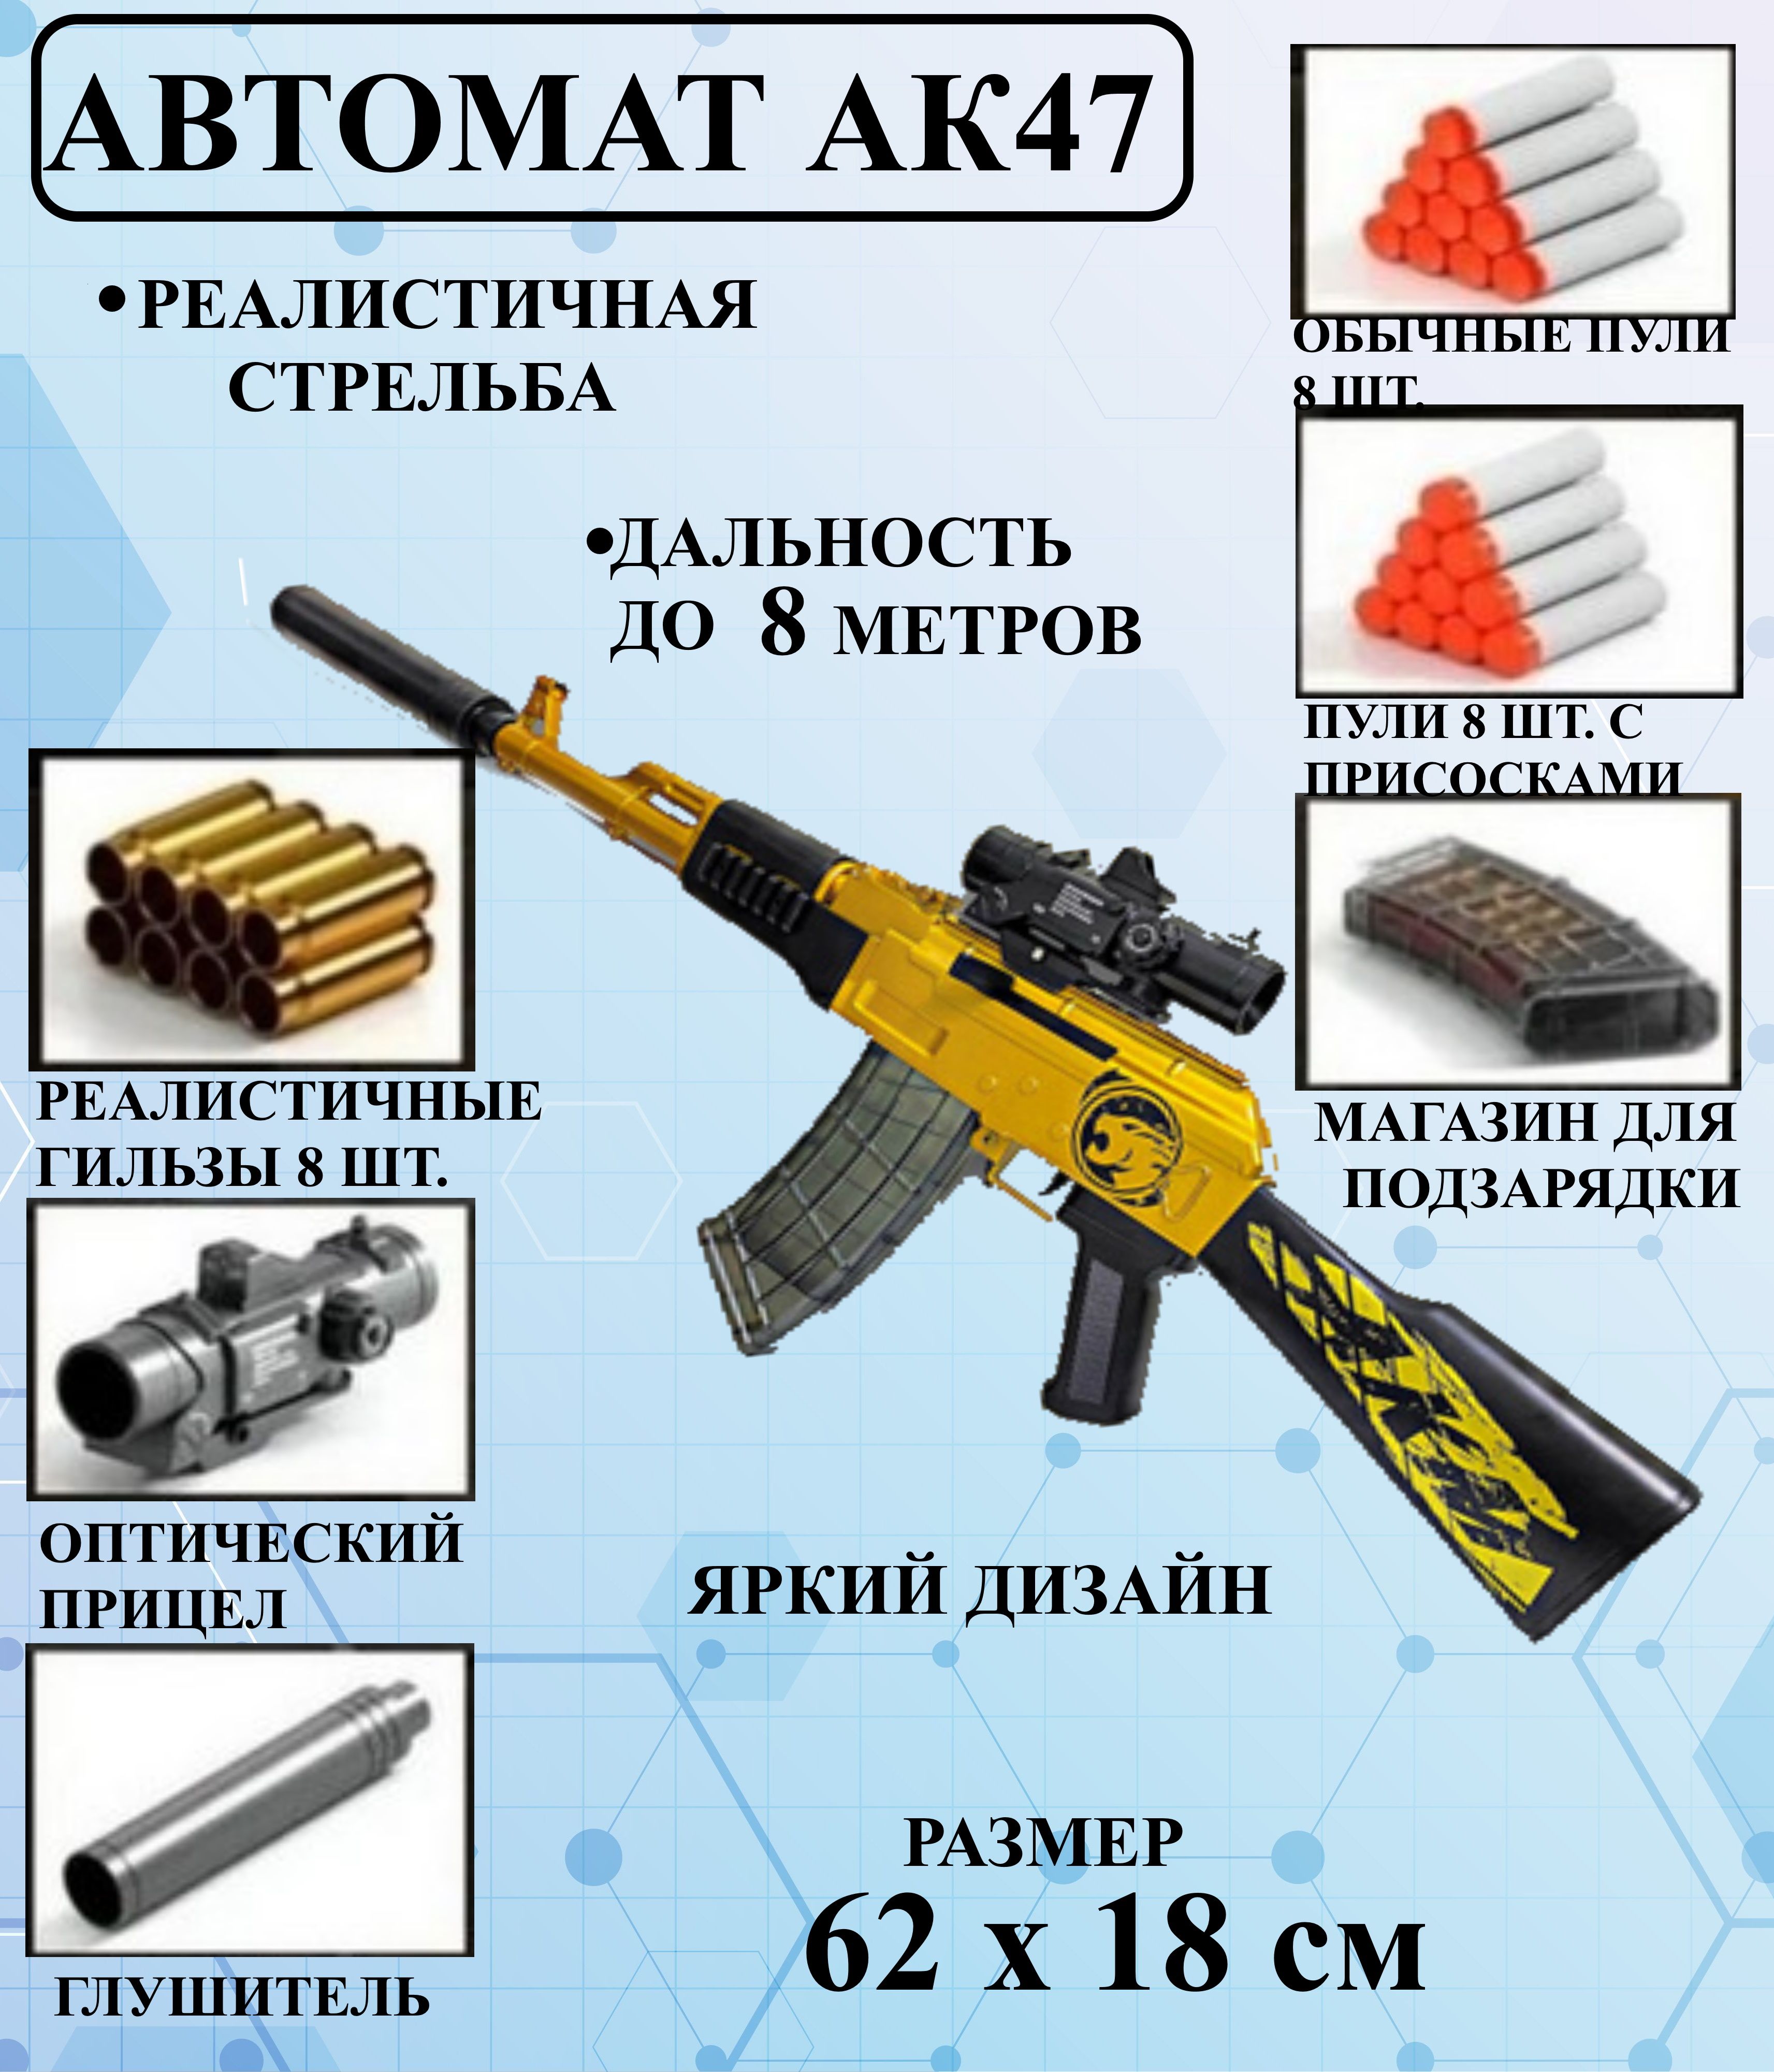 Детский автоматИгроНика АК 47 желтый, игрушечный пневматический бластер пистолет пневматический детский штурм